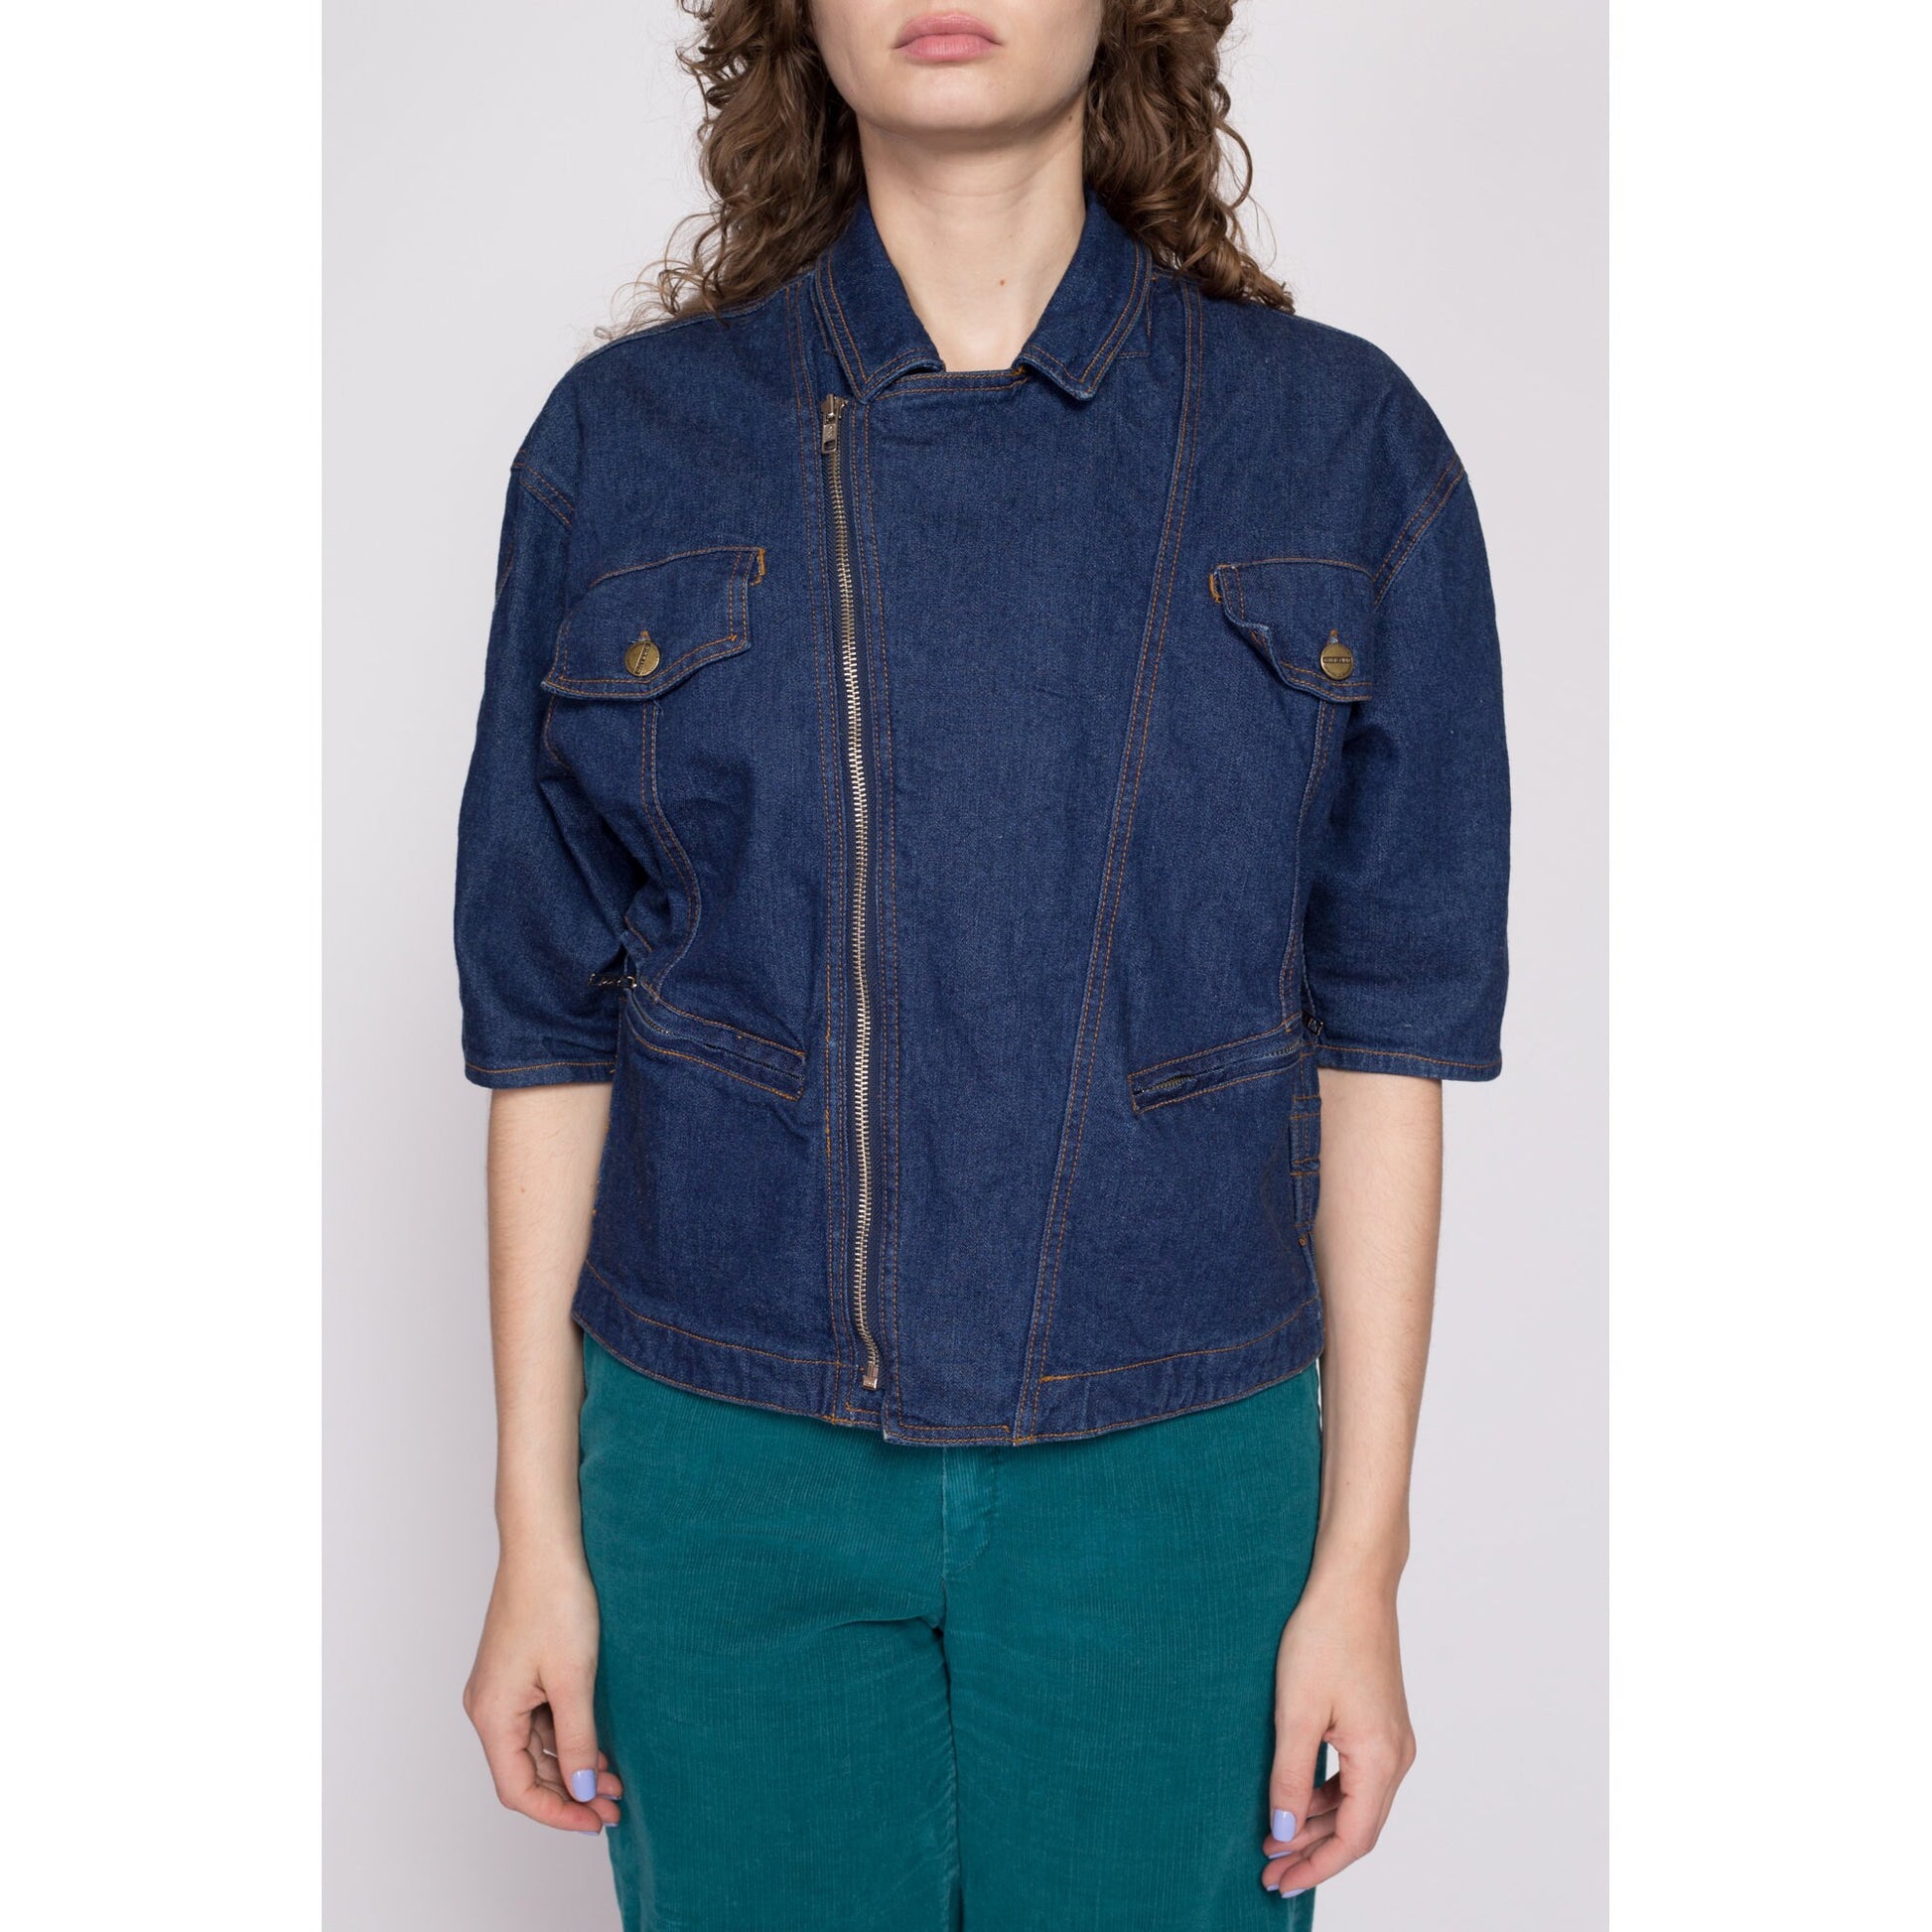 80s Marithe Francois Girbaud Denim Jacket - Small | Vintage Oversize Half Sleeve Asymmetrical Zip Up Jacket